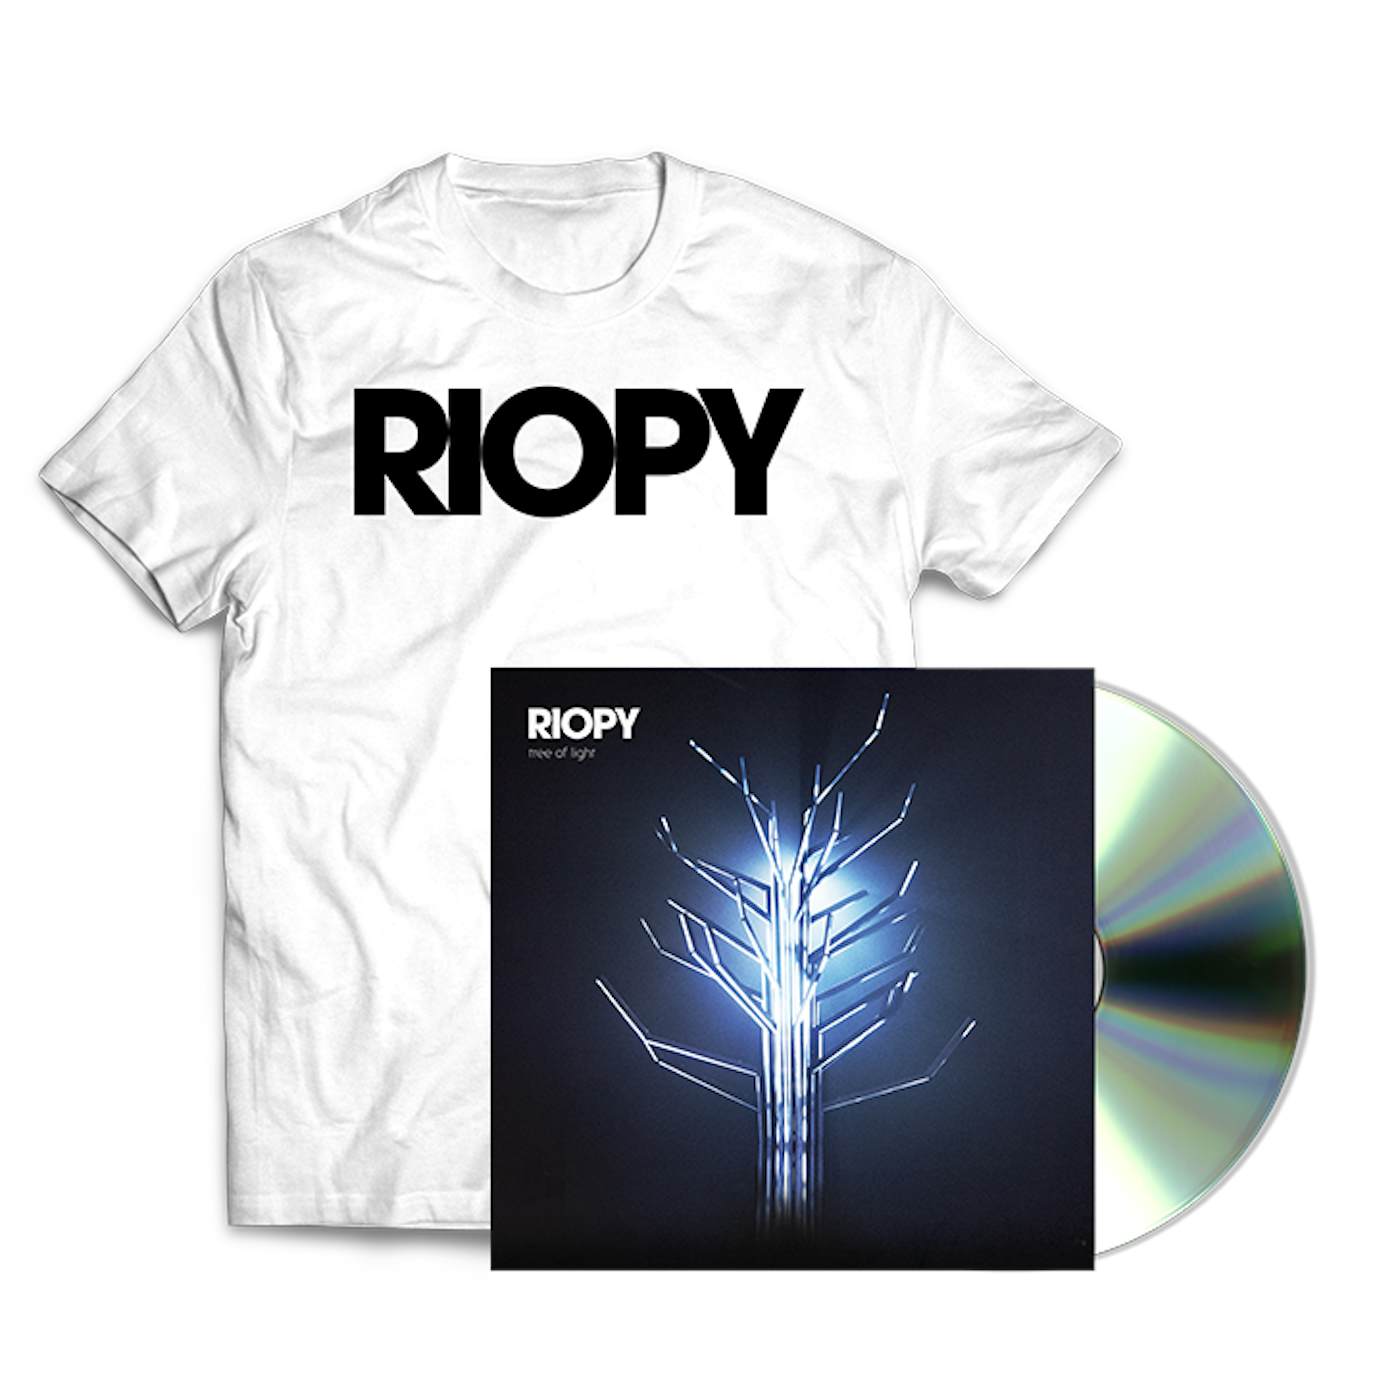 RIOPY Tree of Light CD & T-shirt Bundle